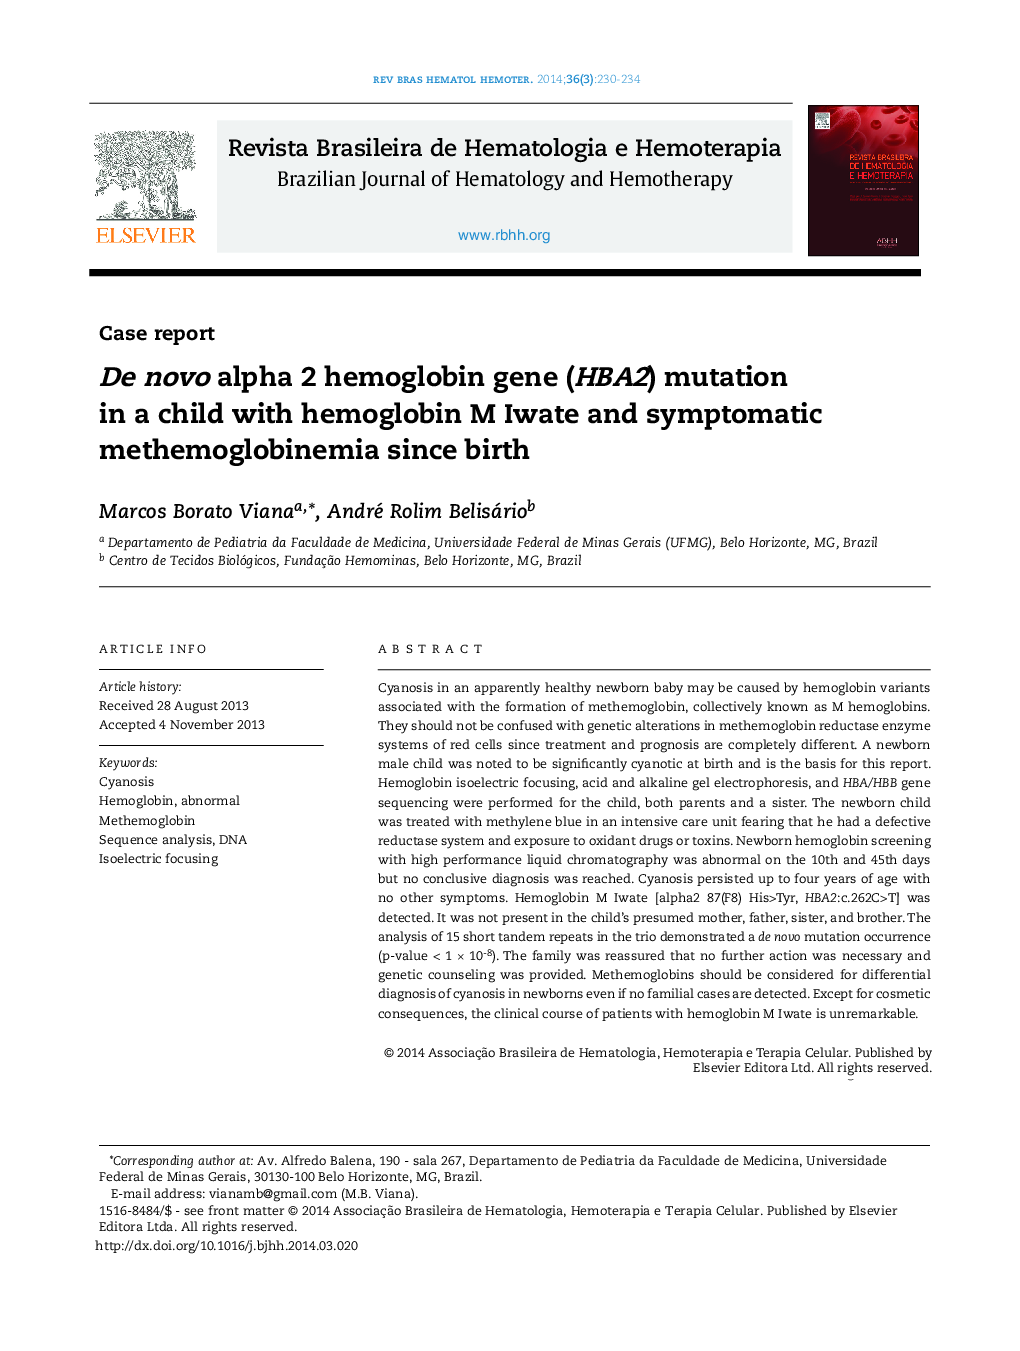 De novo alpha 2 hemoglobin gene (HBA2) mutation in a child with hemoglobin M Iwate and symptomatic methemoglobinemia since birth